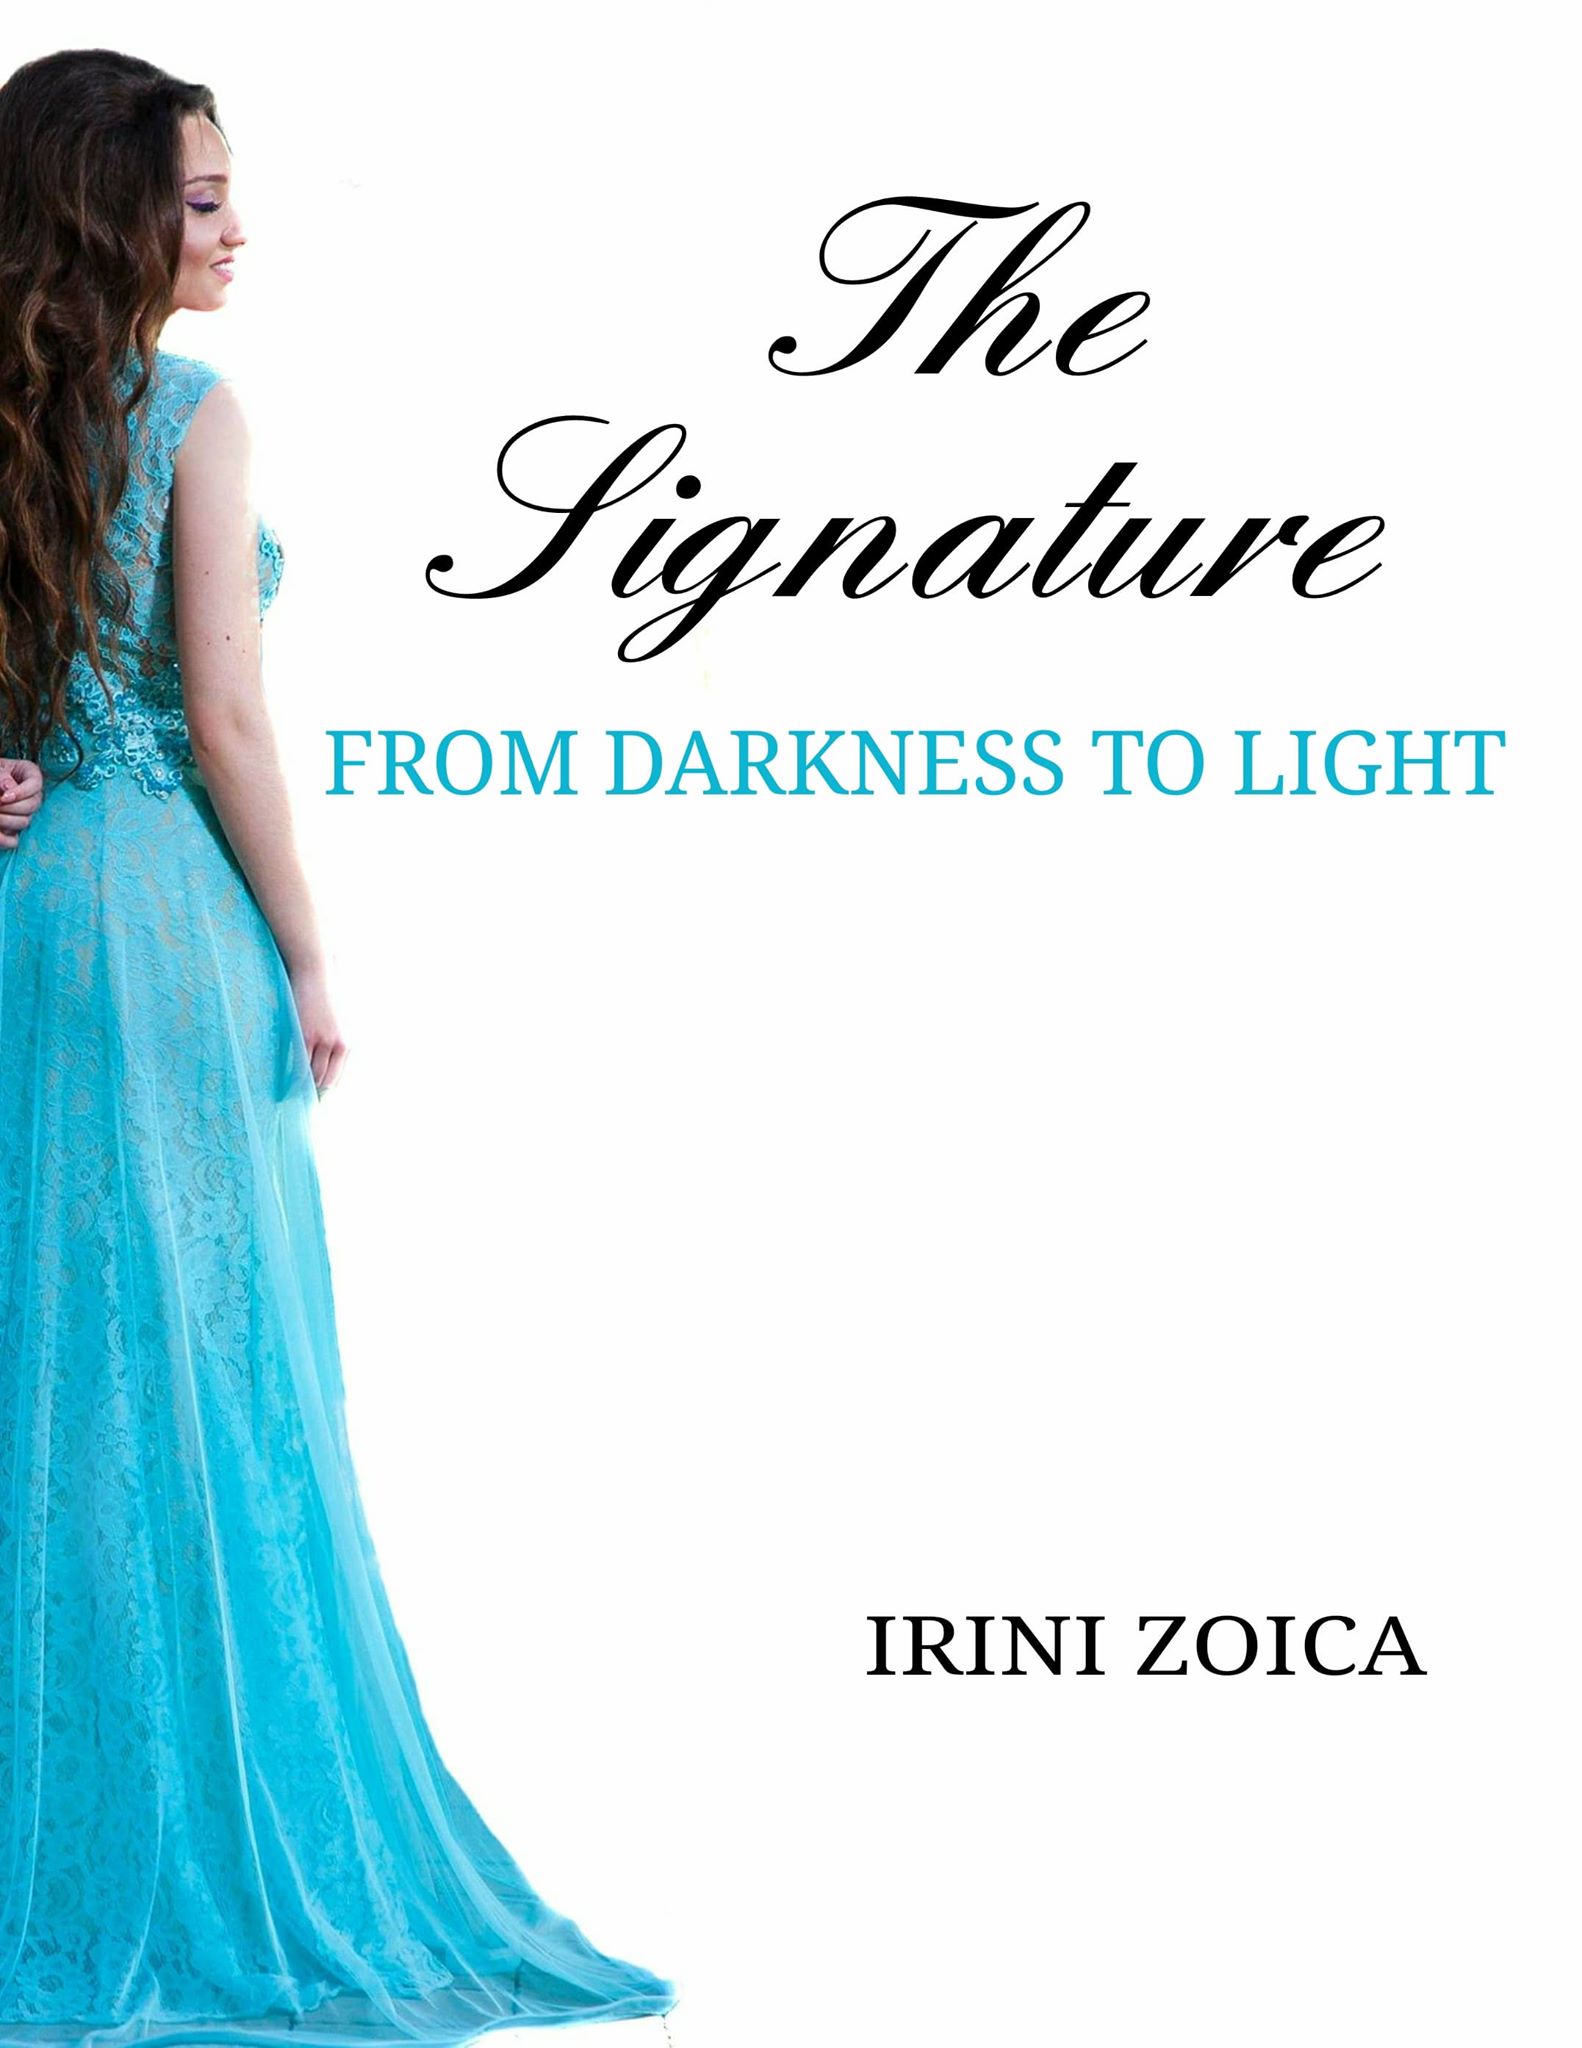 FREE: The Signature by Irini Zoica